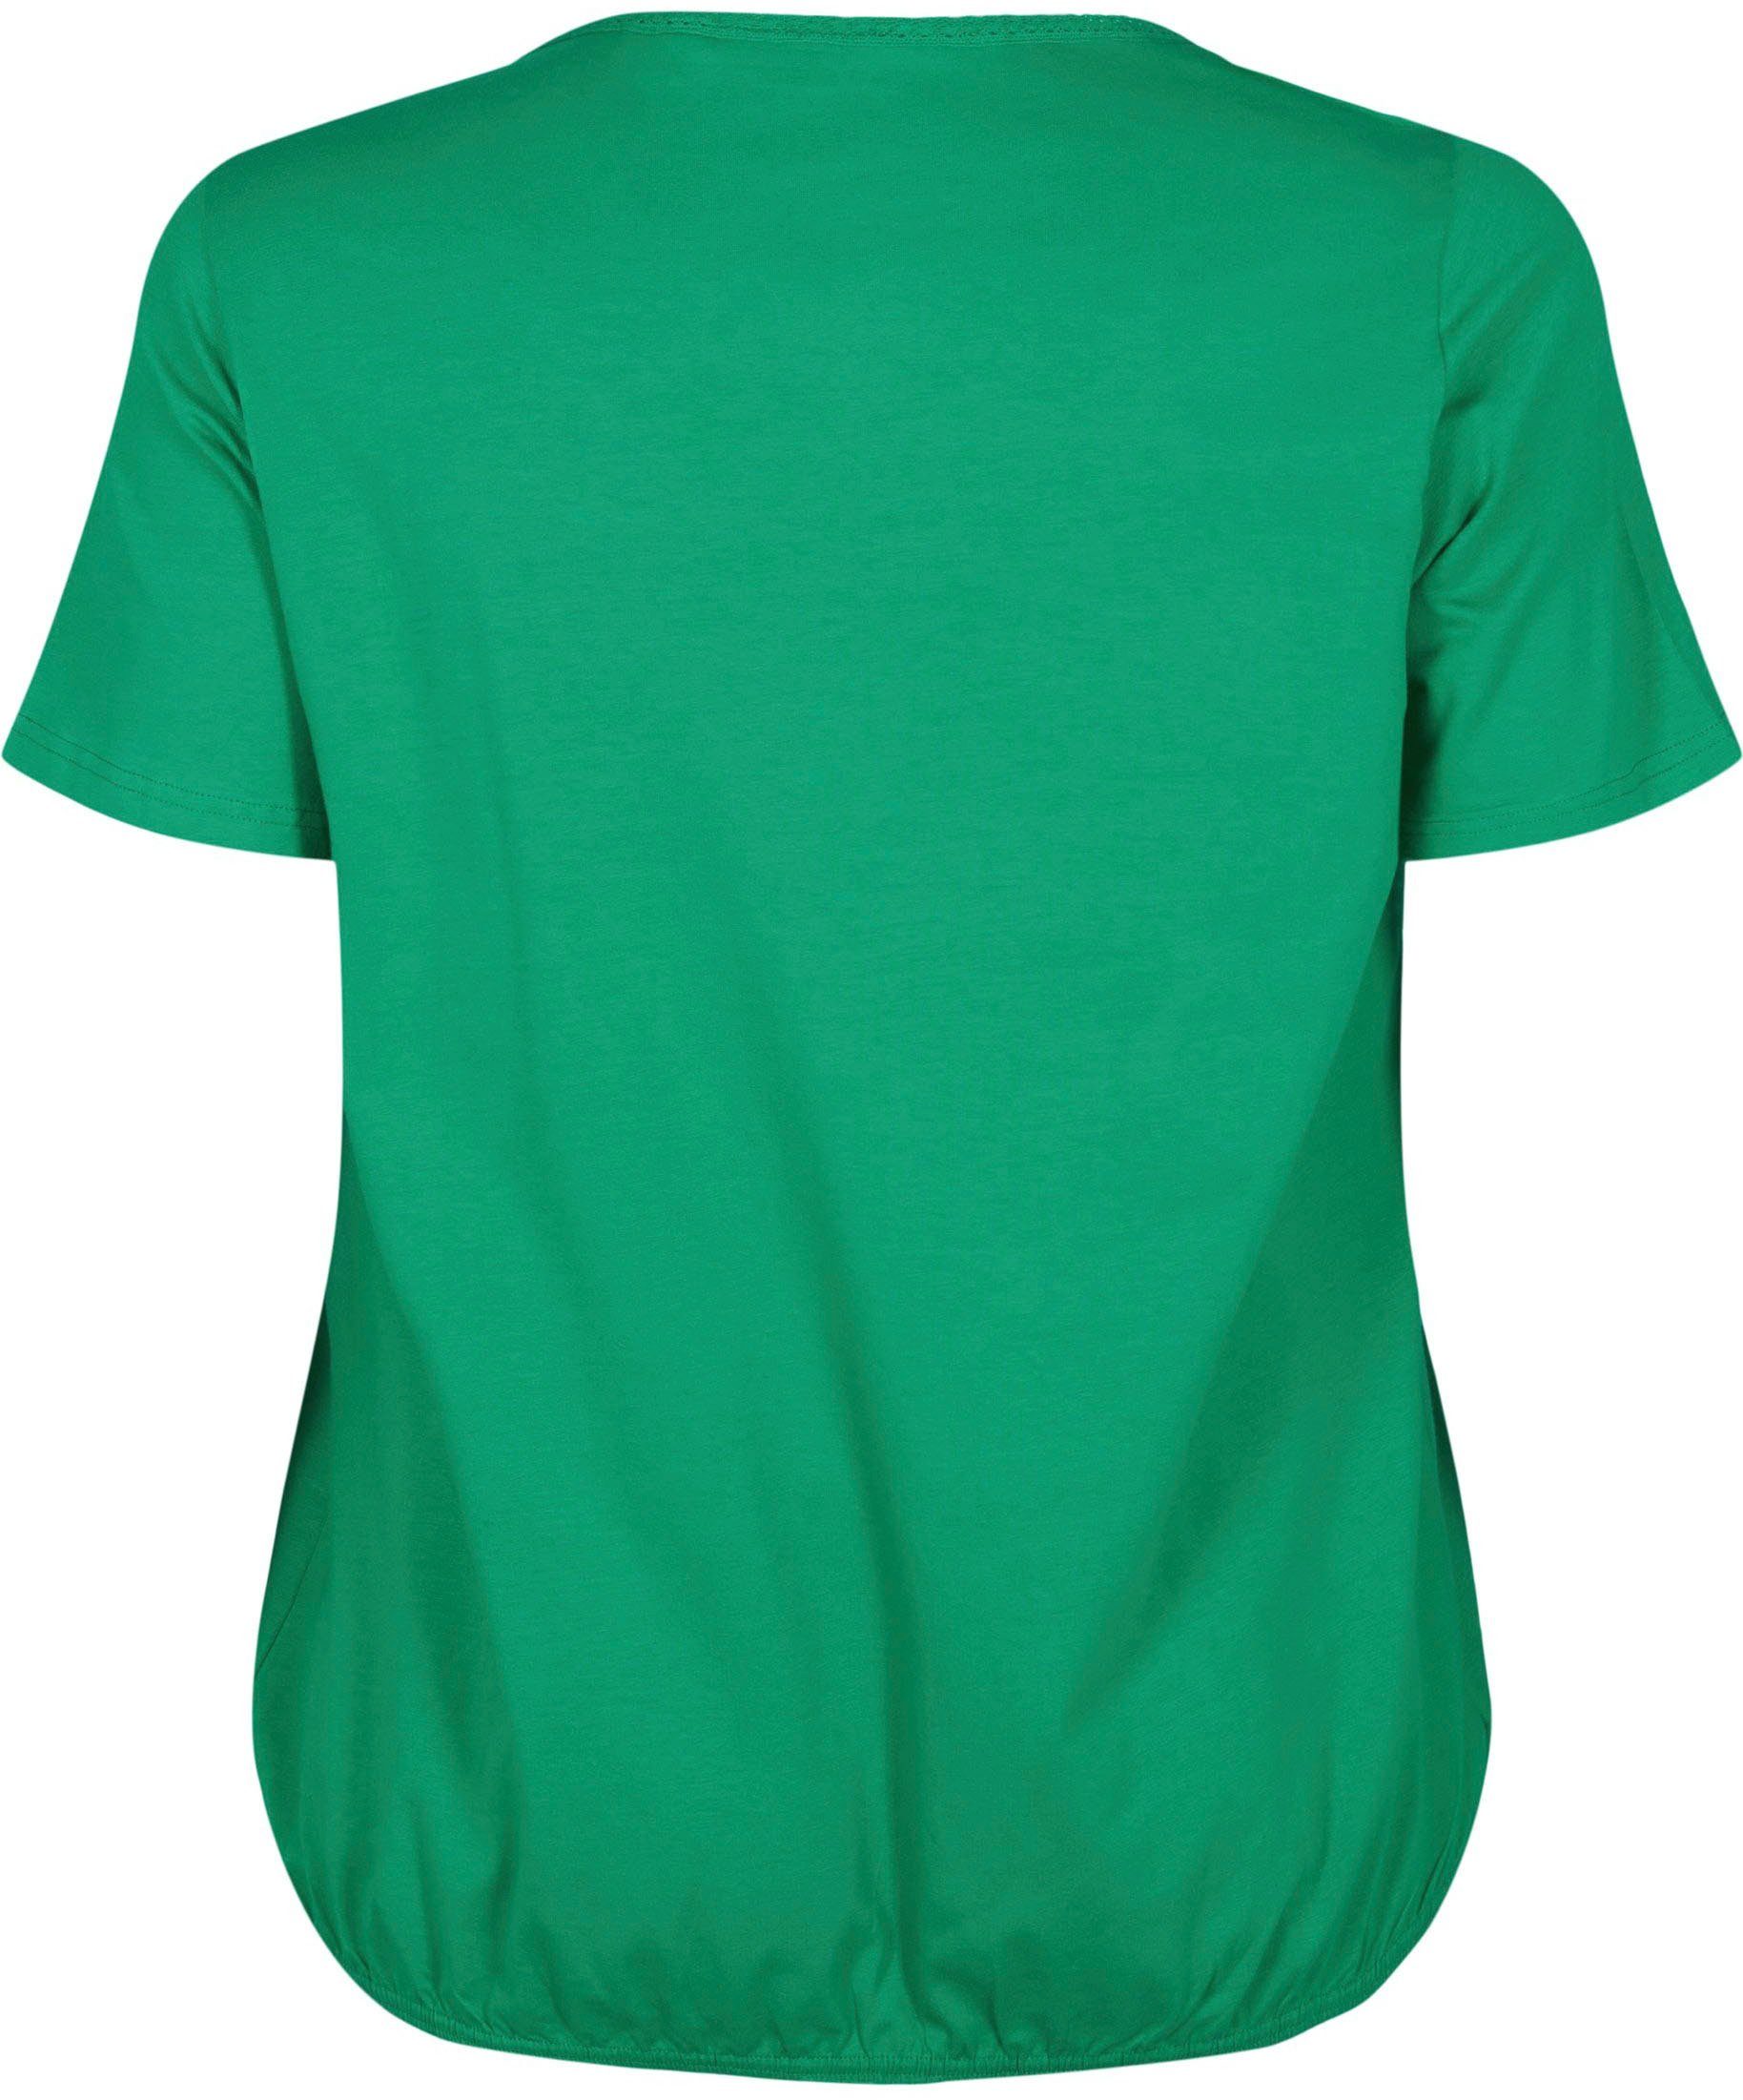 Zizzi jolly green VPOLLY Zizzi T-Shirt